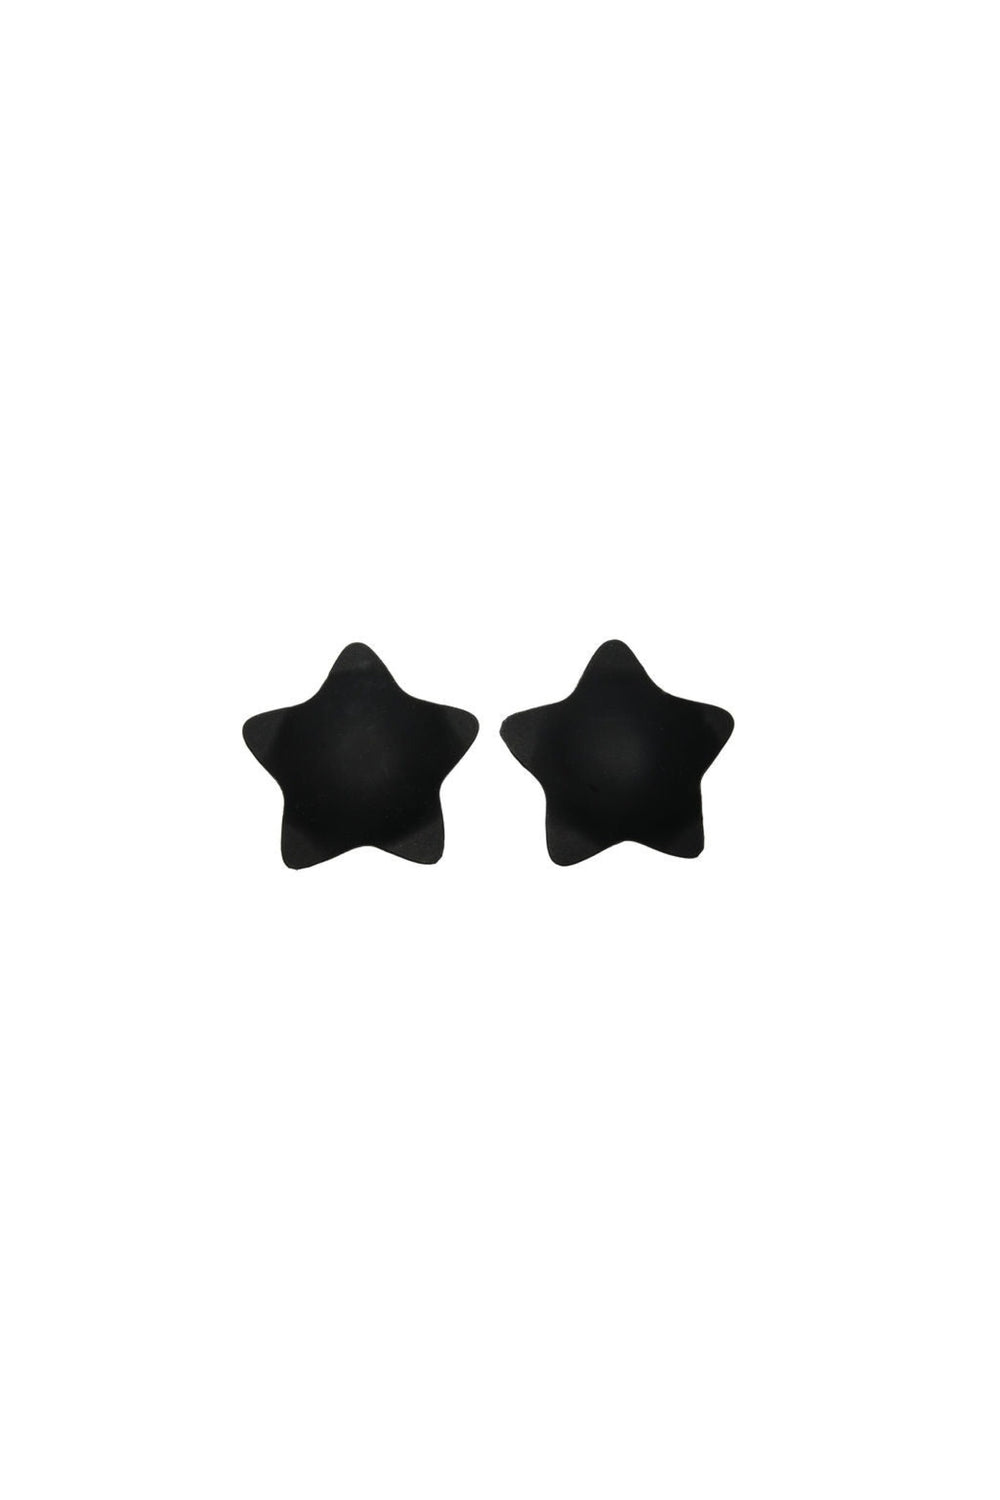 Black Star Nipple Covers